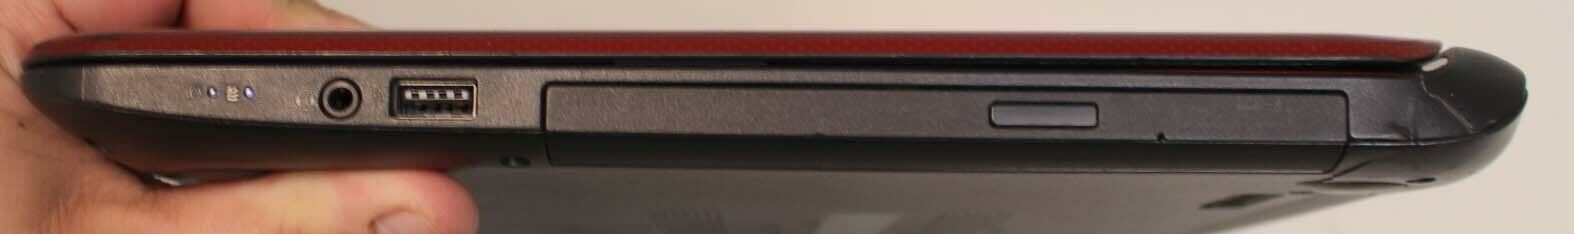 HP Flyer Red 15-F272WM Laptop 15.6